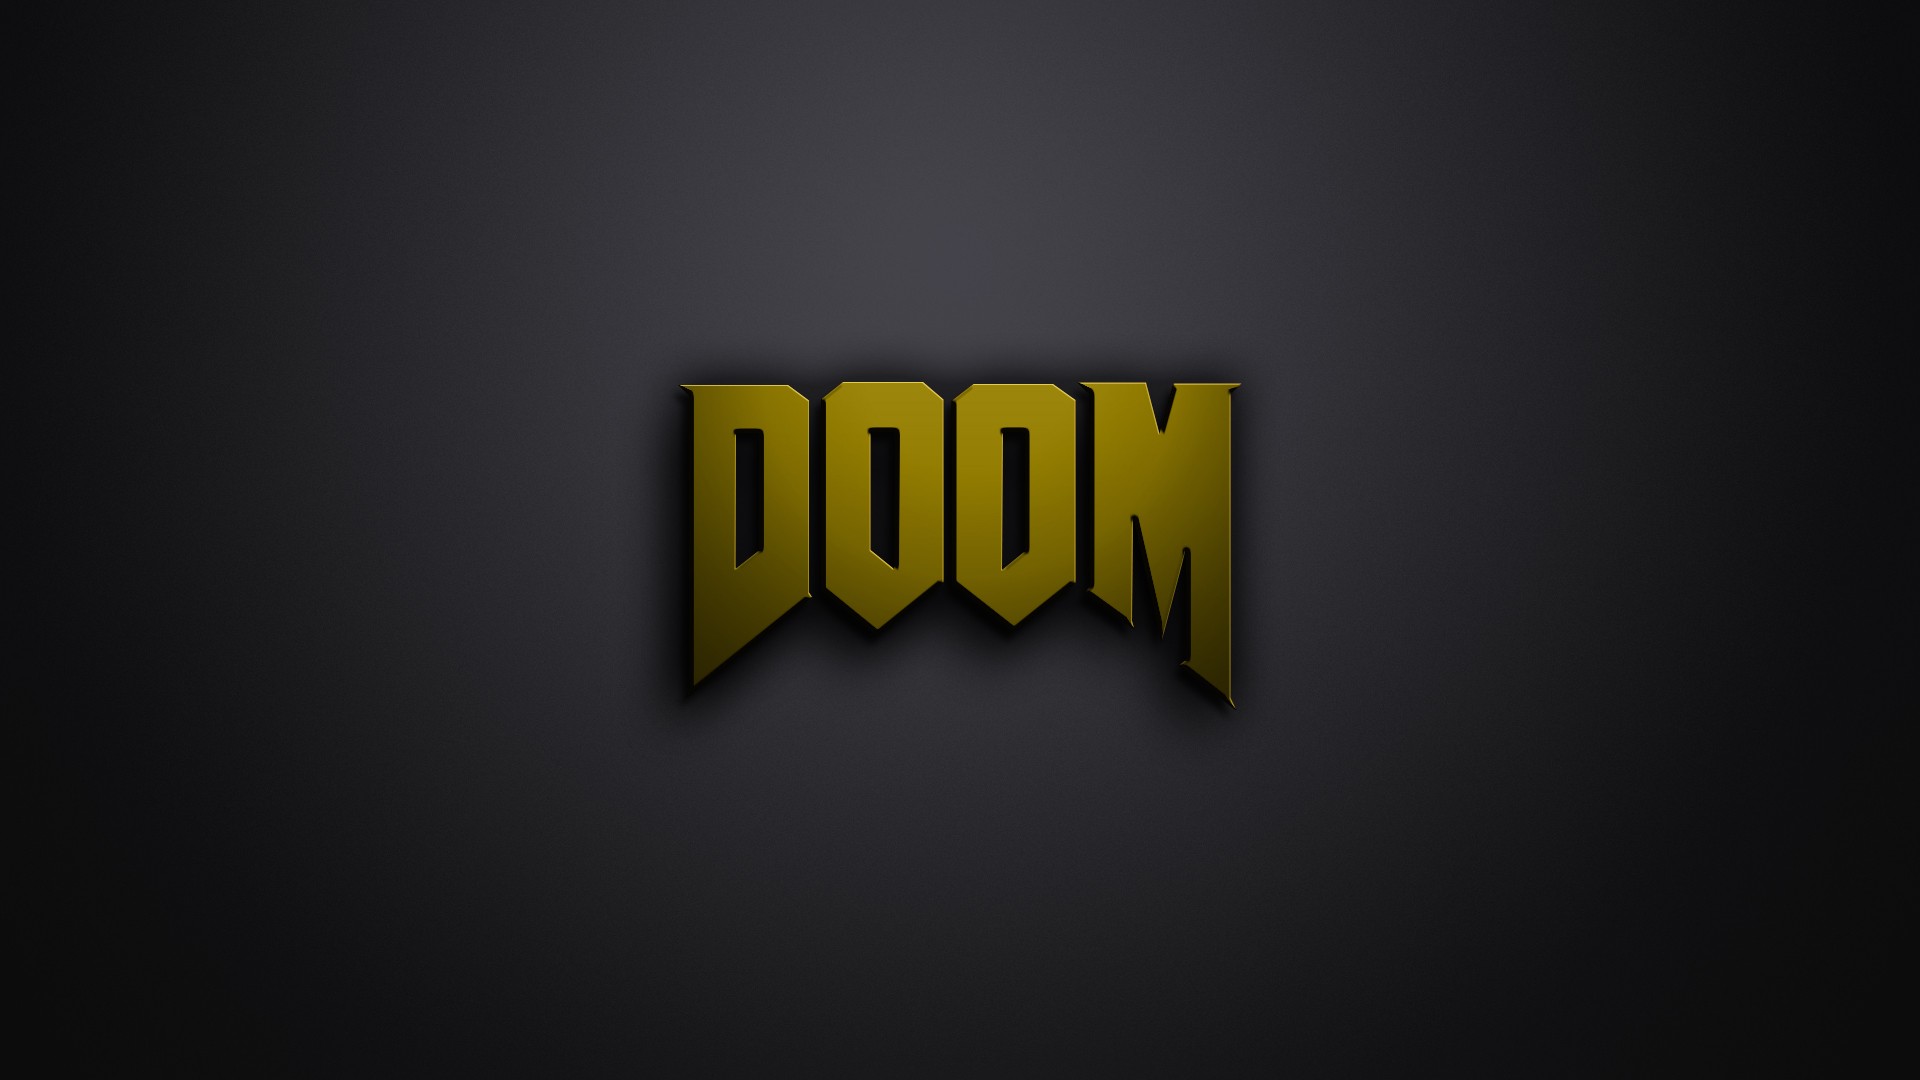 Doom (game), Video games, Digital art, Typography, Minimalism Wallpaper